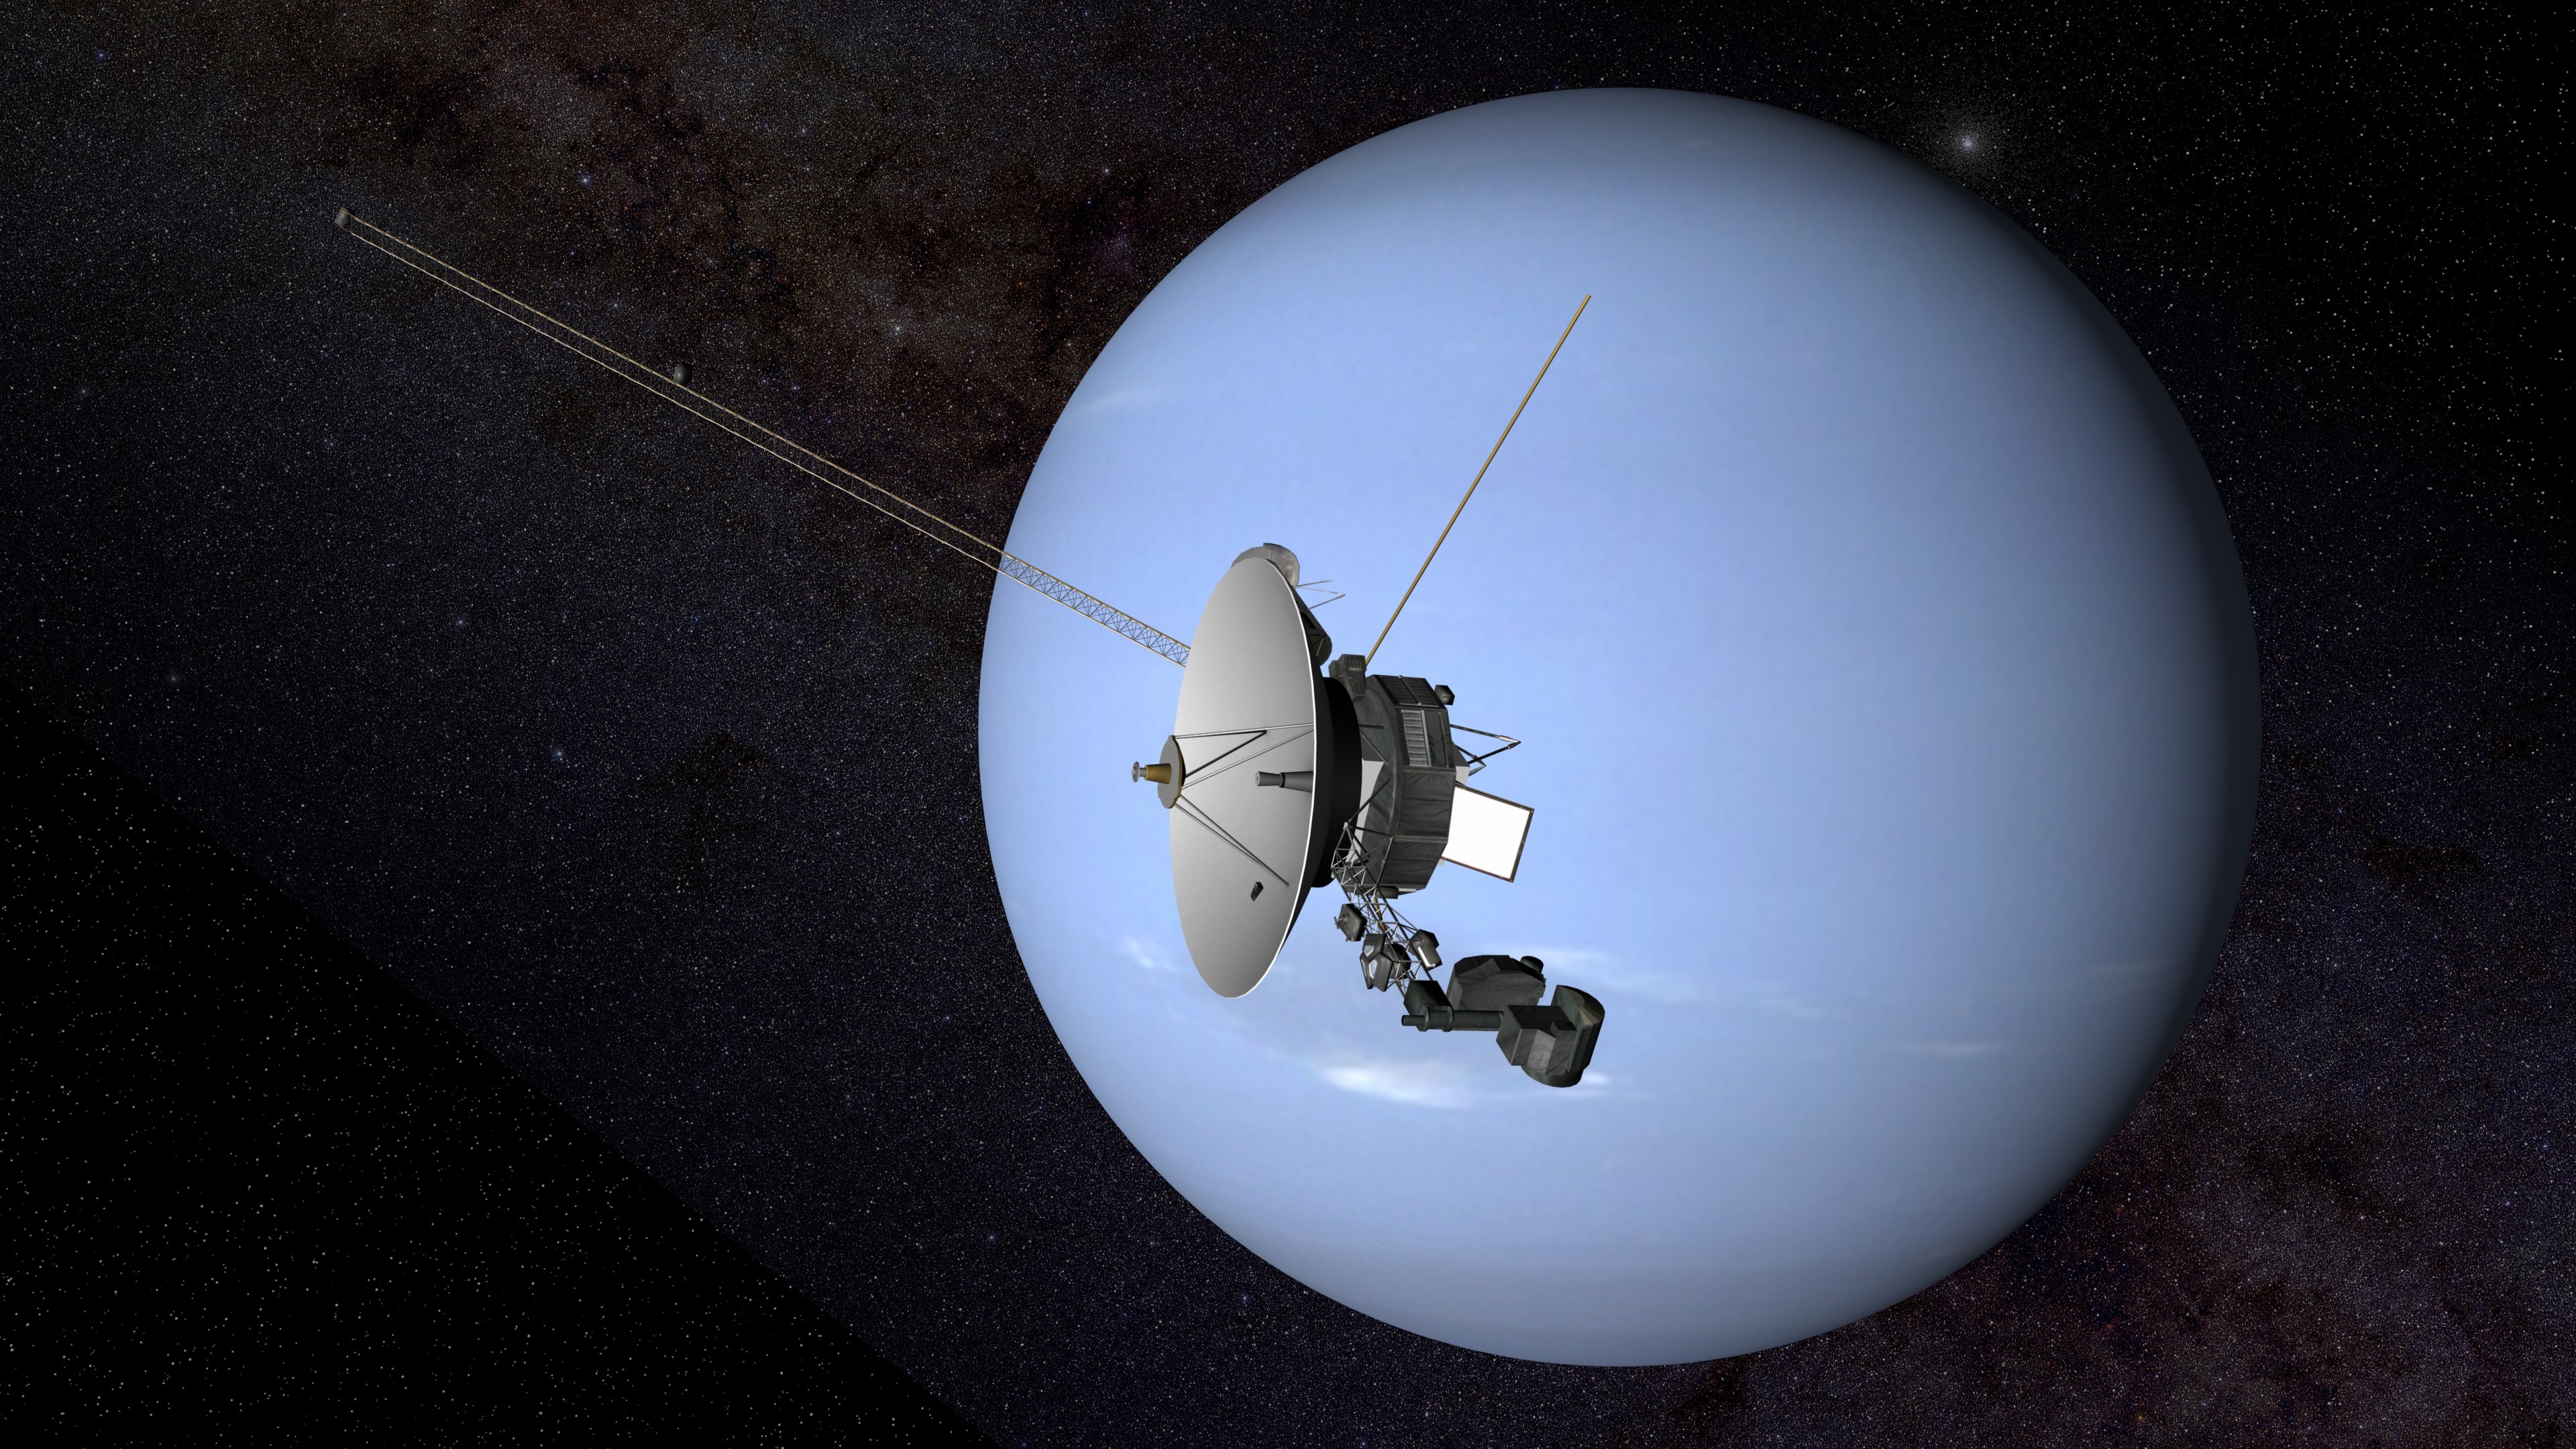 Voyager spacecraft 4k Ultra HD Wallpaper